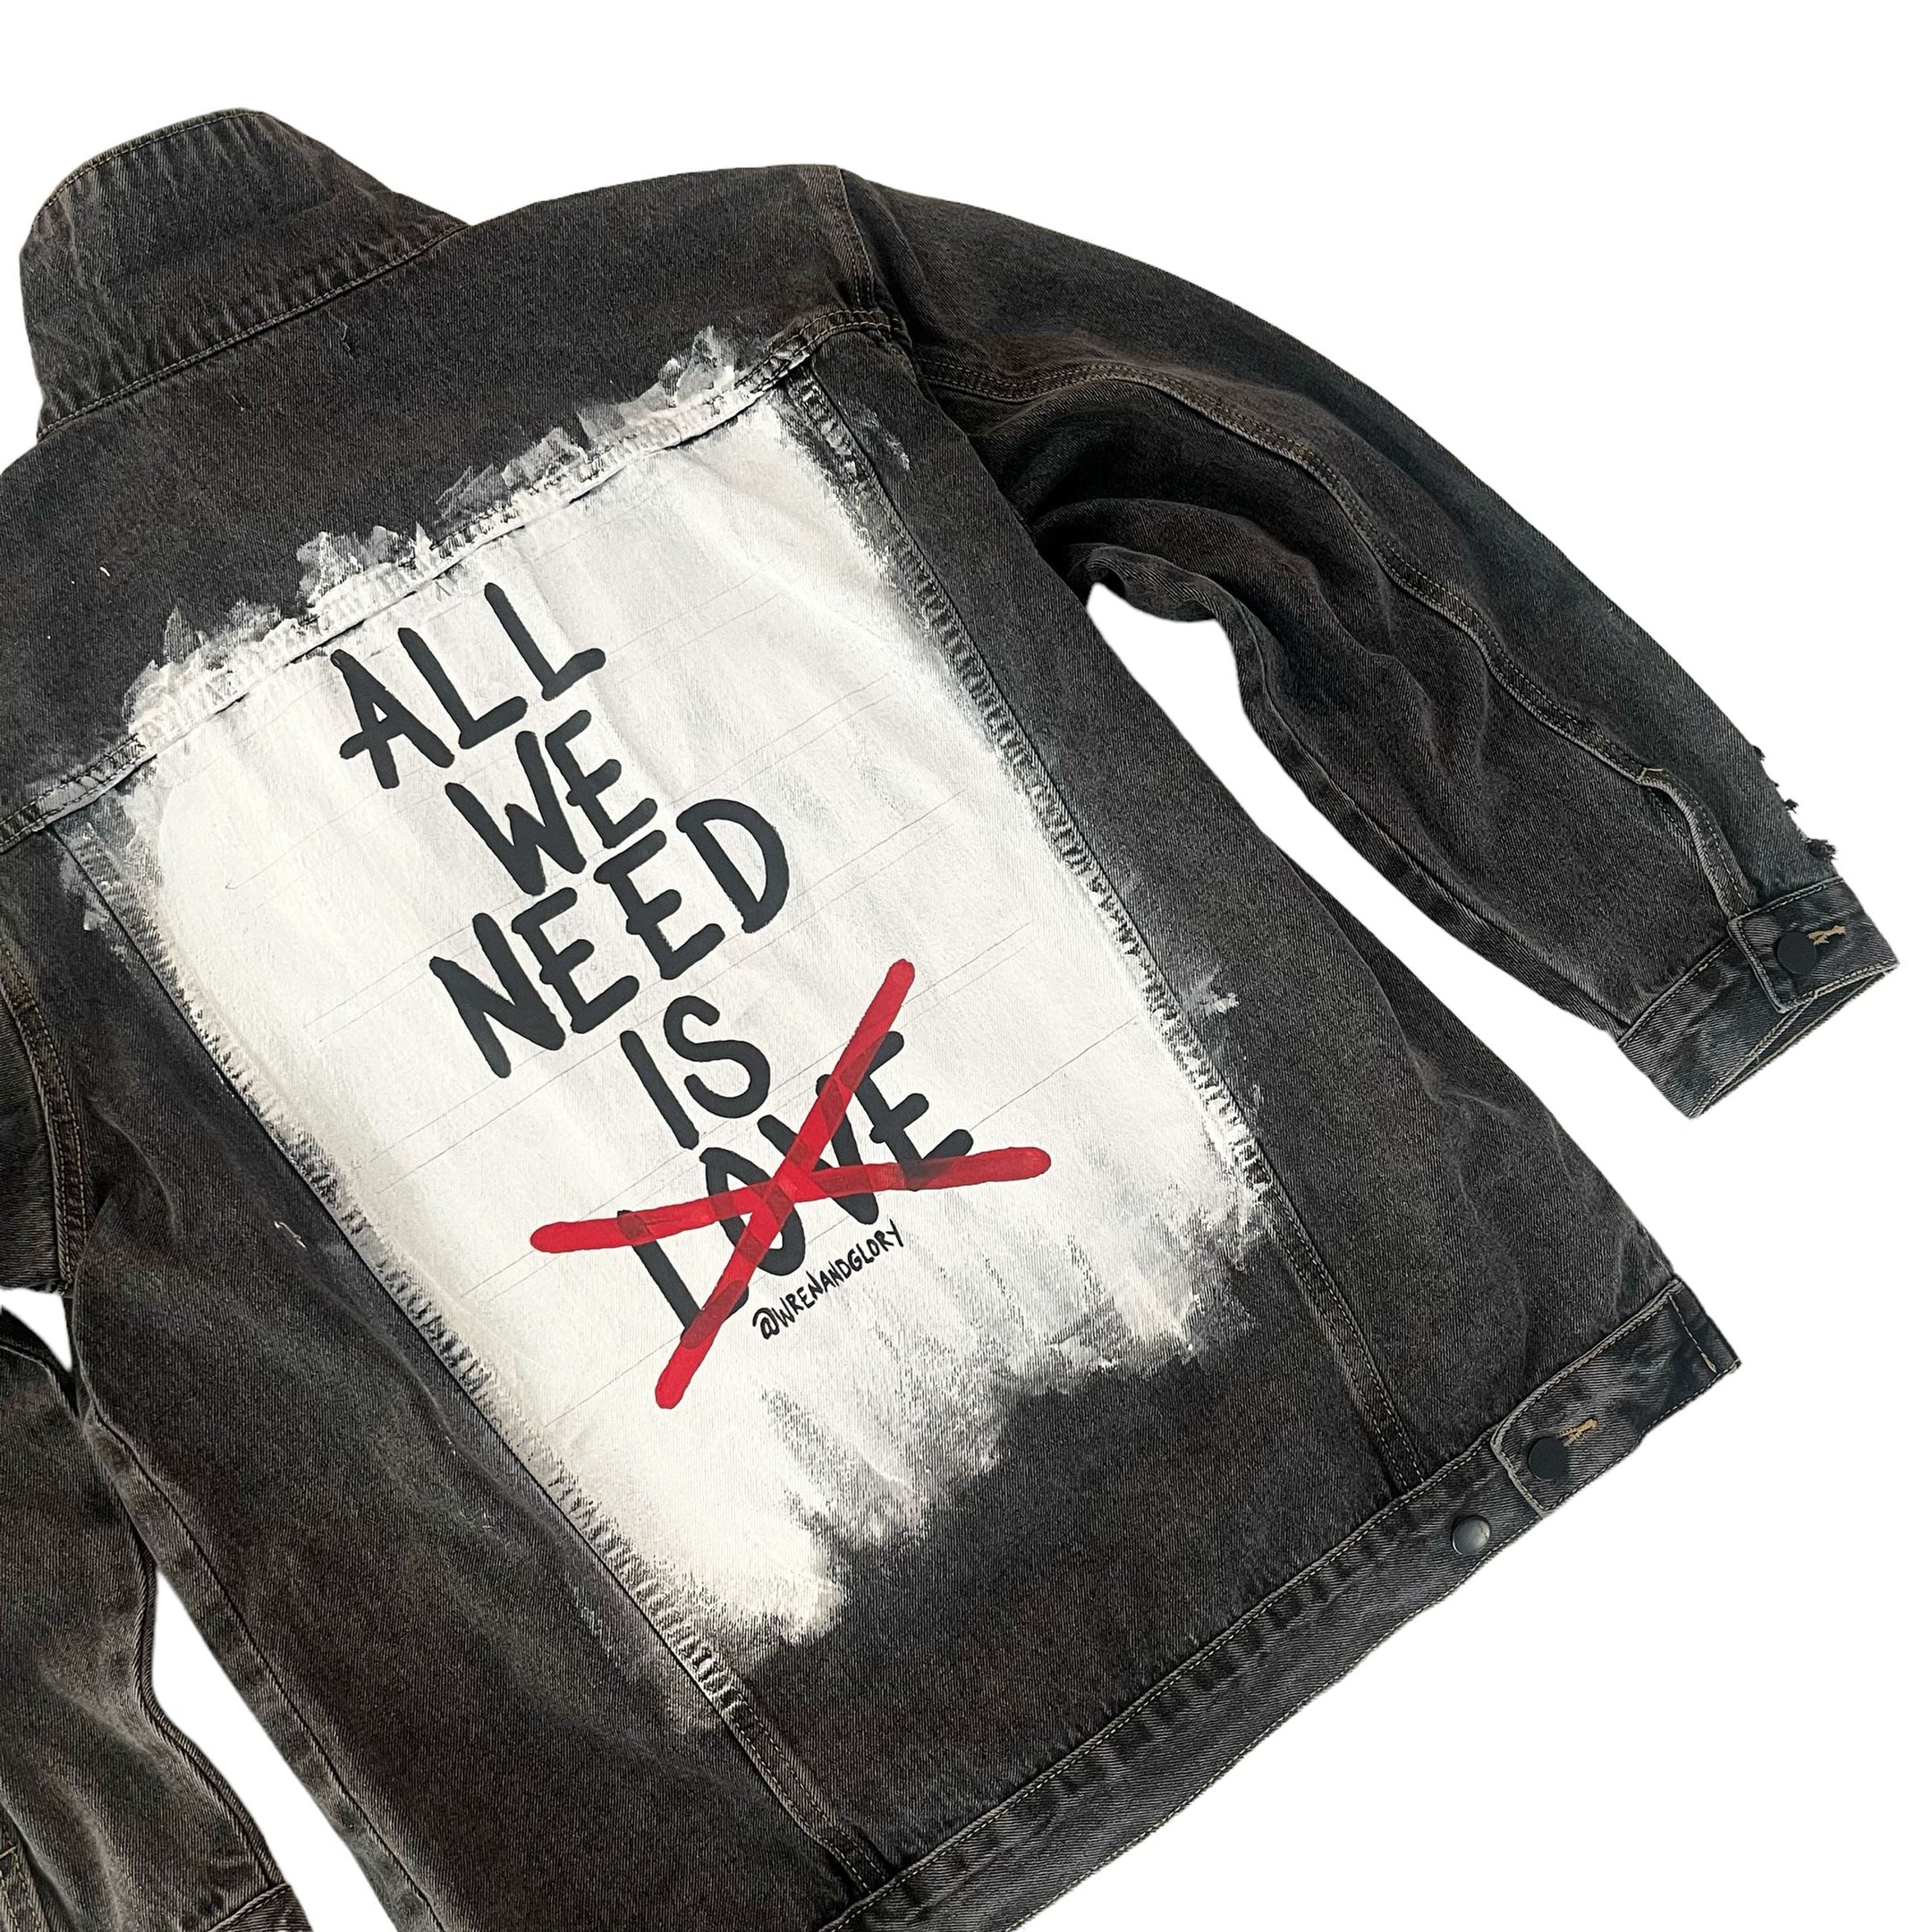 Buy What We Need' Denim Jacket by Wren + Glory